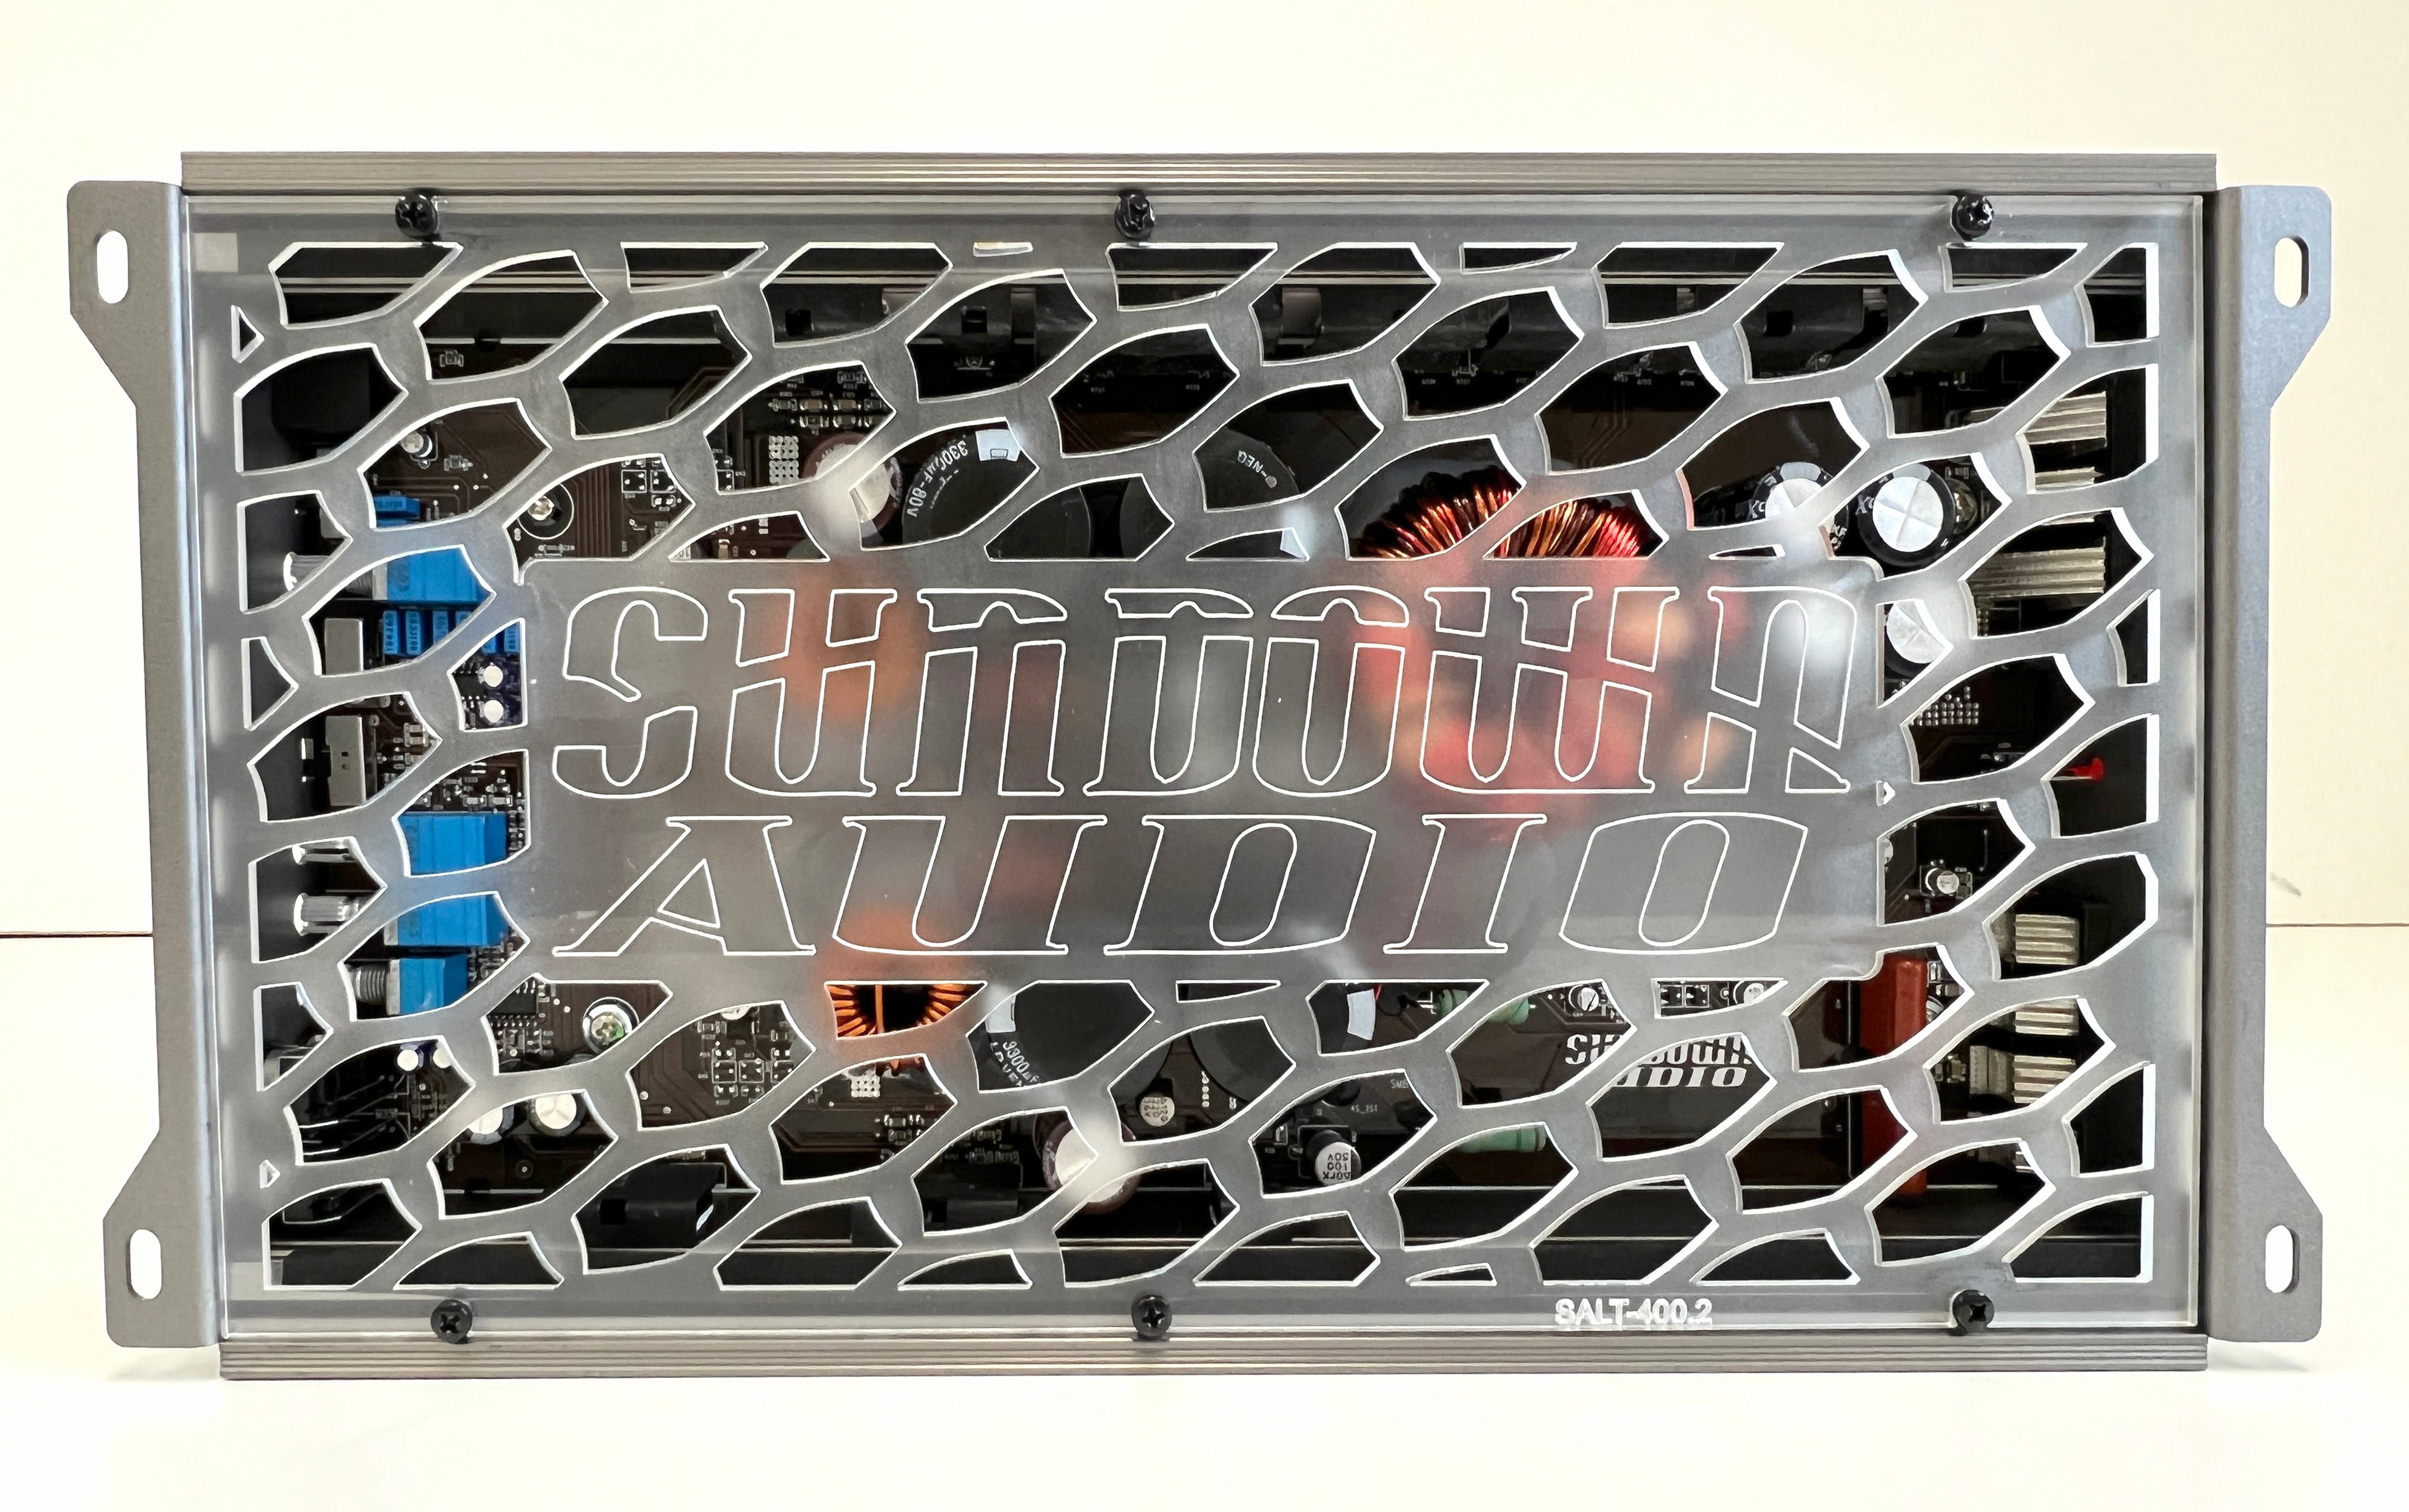 Gately Amplifier Back Plate - Sundown Audio SALT 400.2